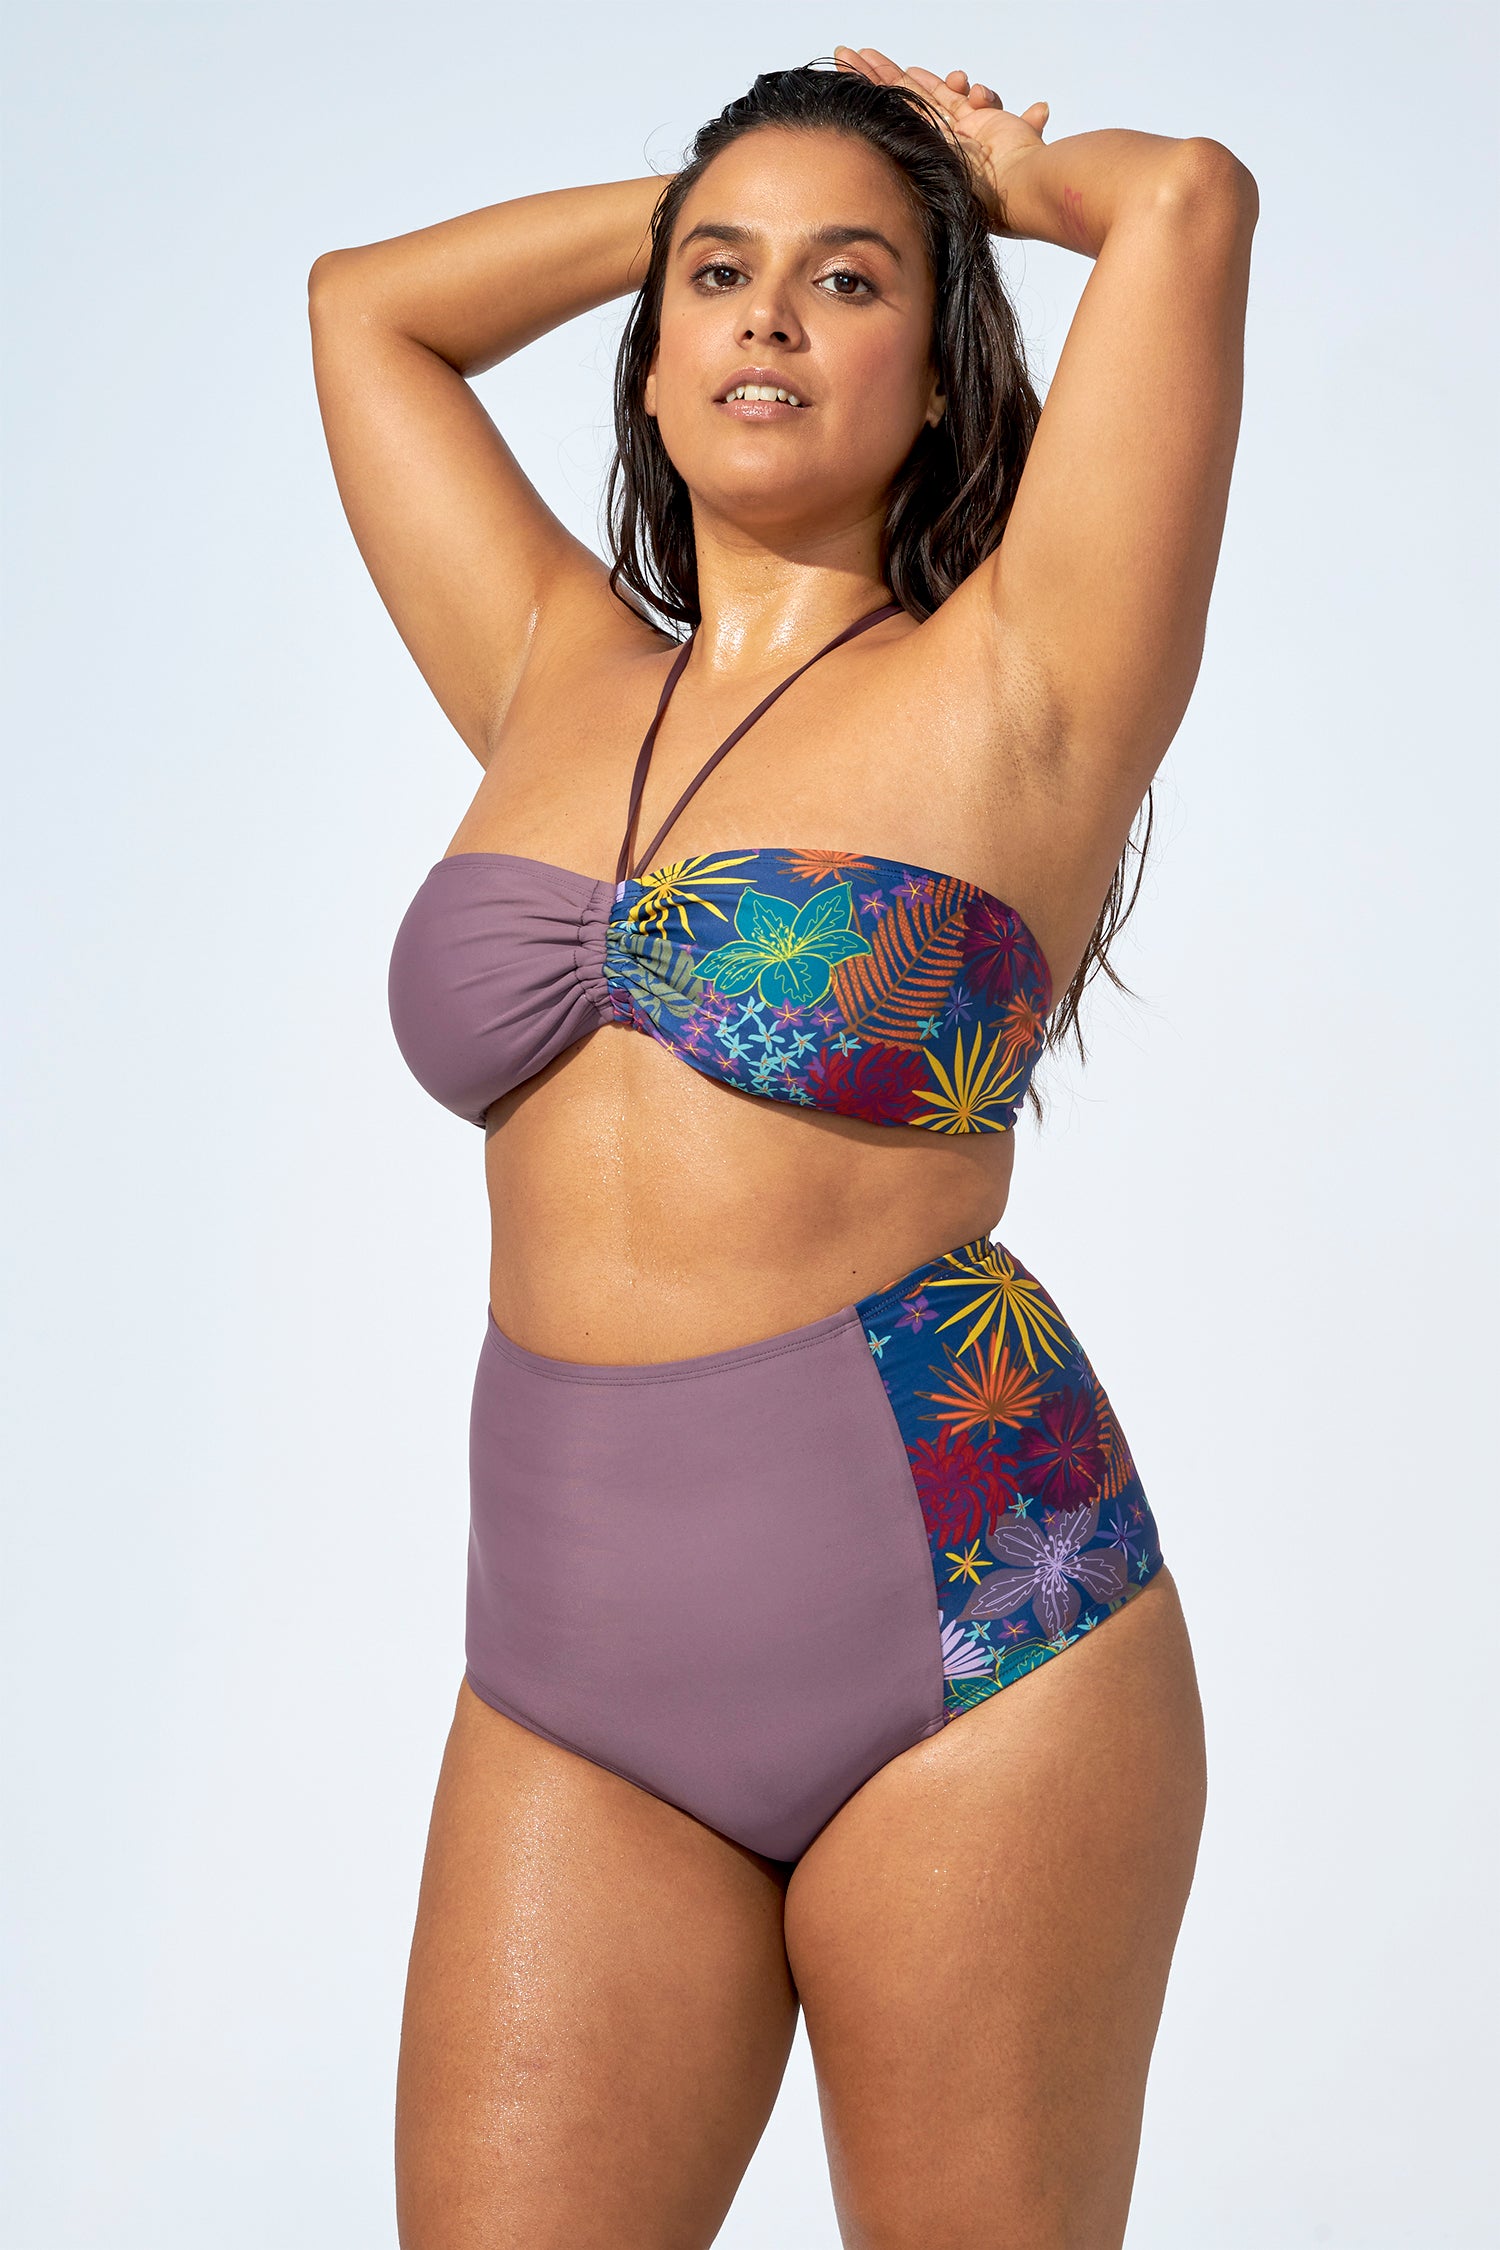 Plus Size Women's Swimming Suit High Waist Bikini Big Breasts